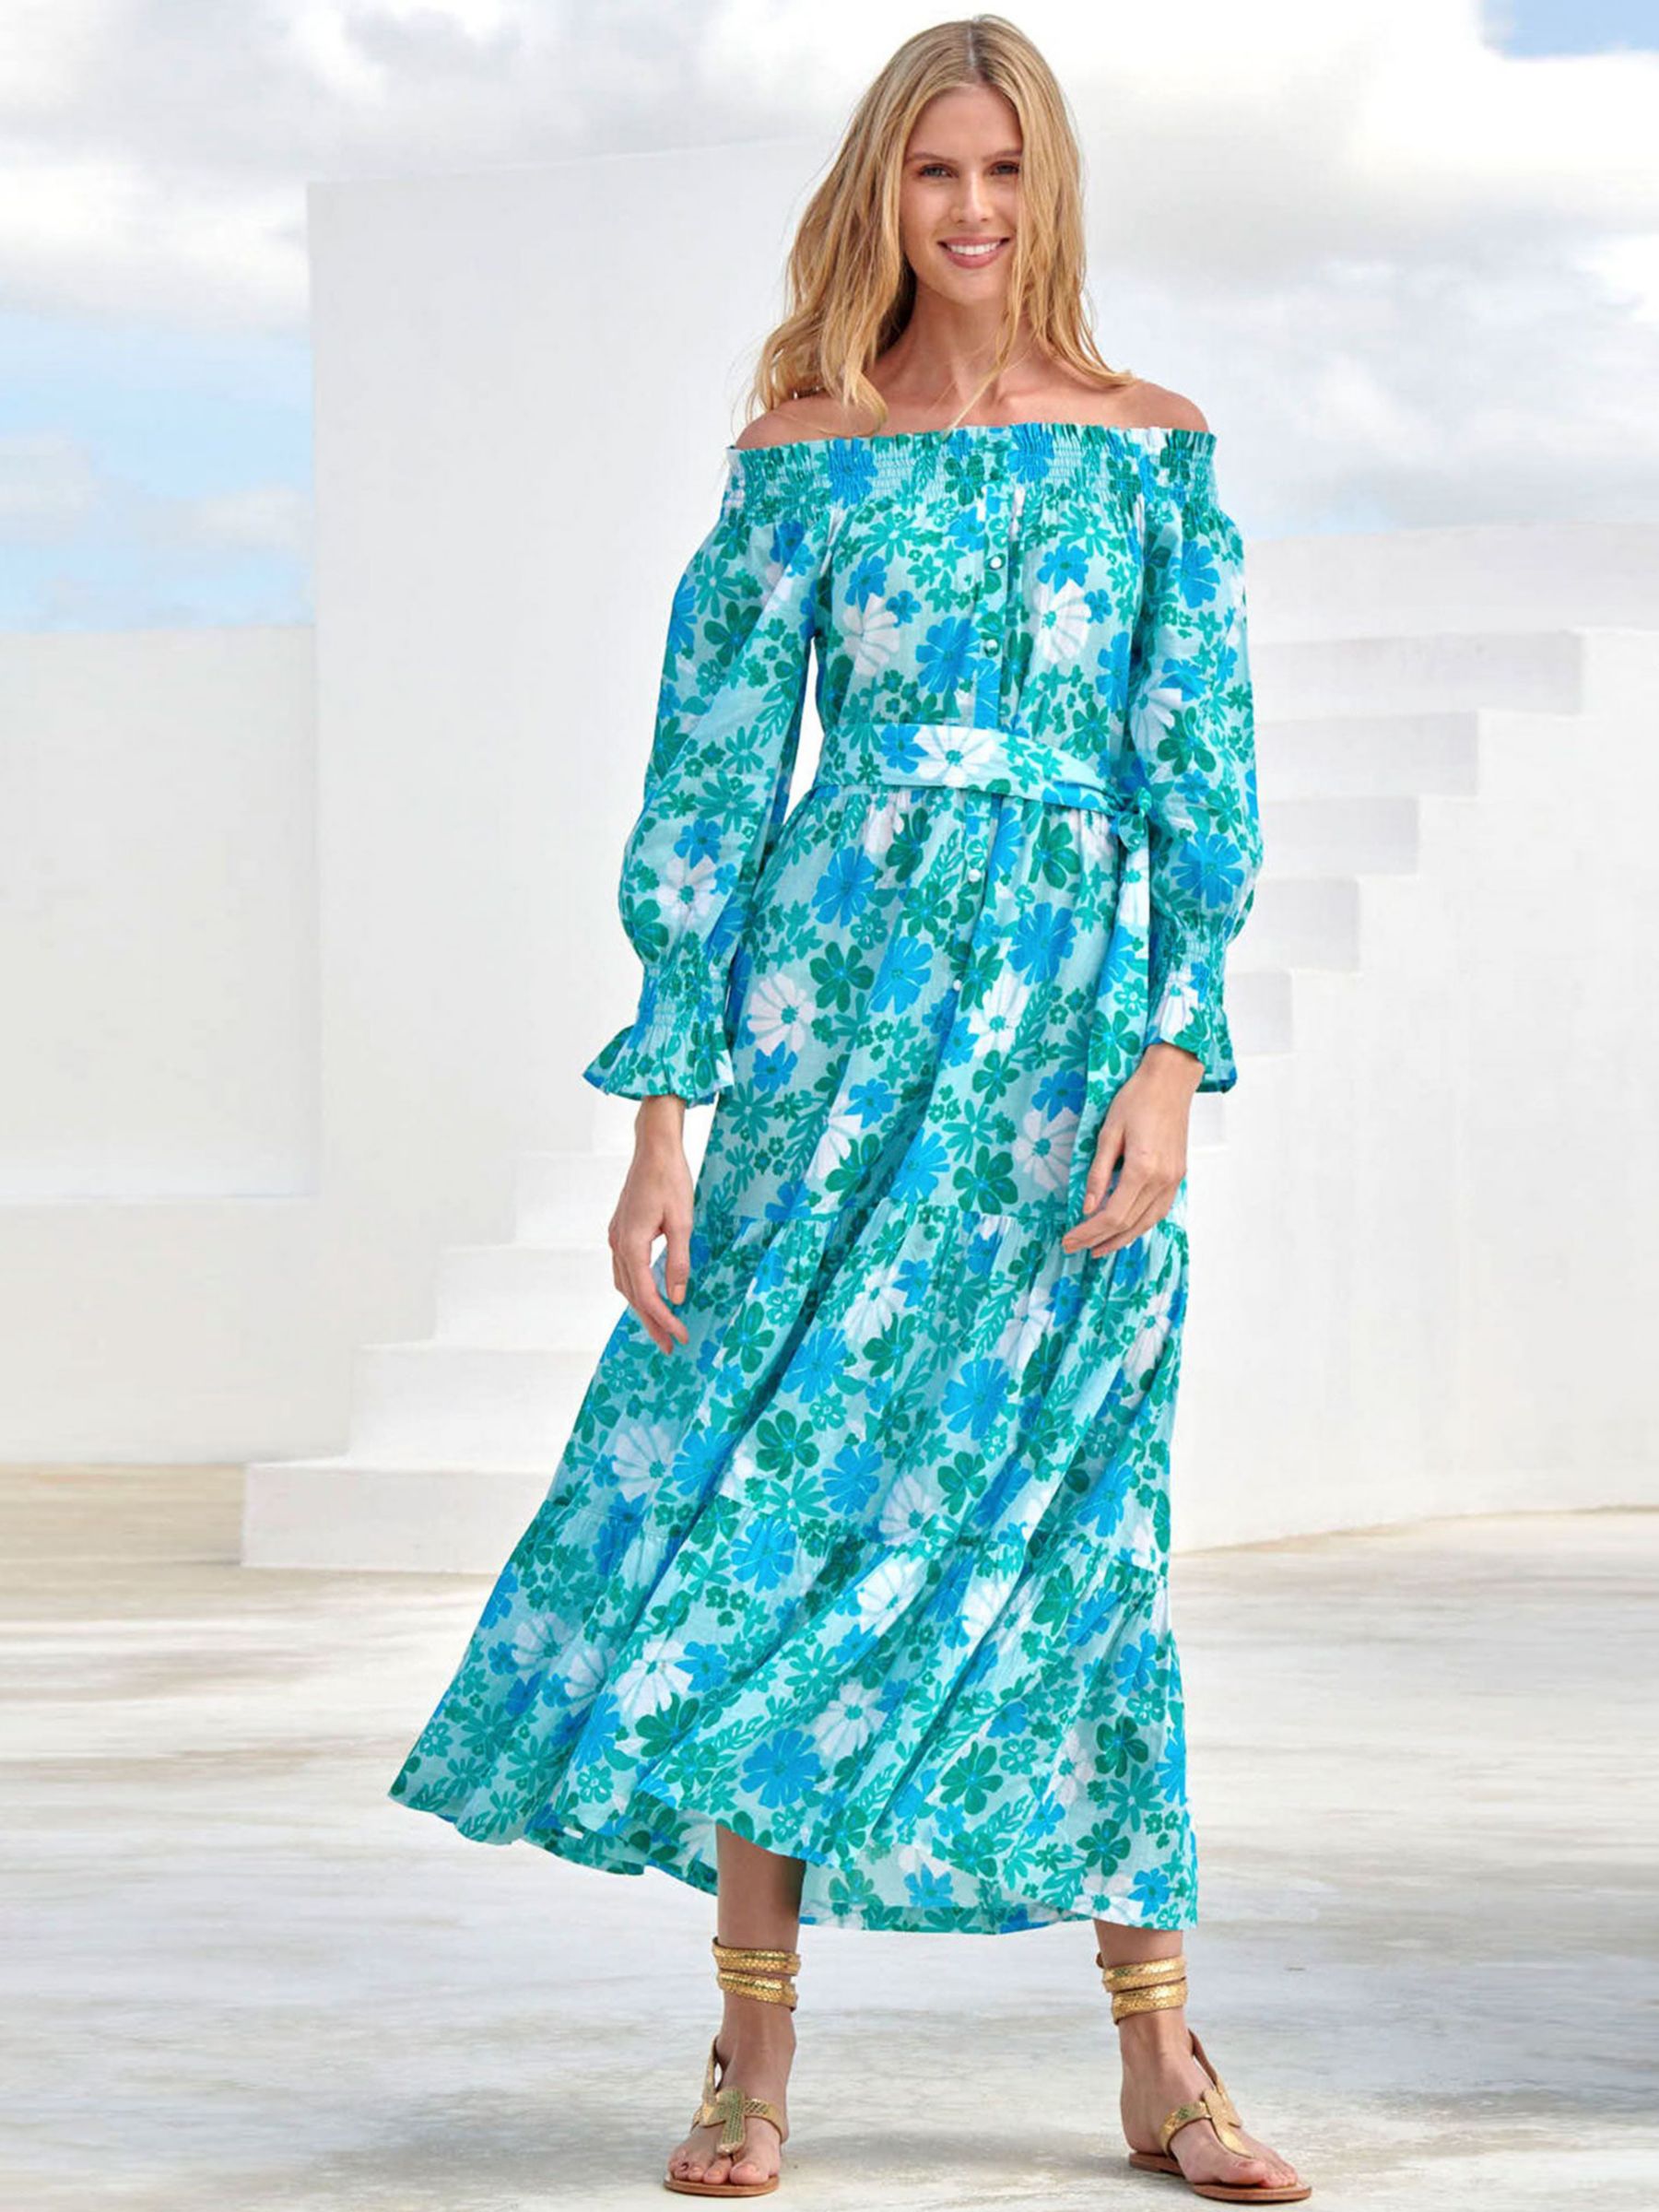 Aspiga Holly Cotton Retro Floral Tiered Maxi Dress, Sea Green, S